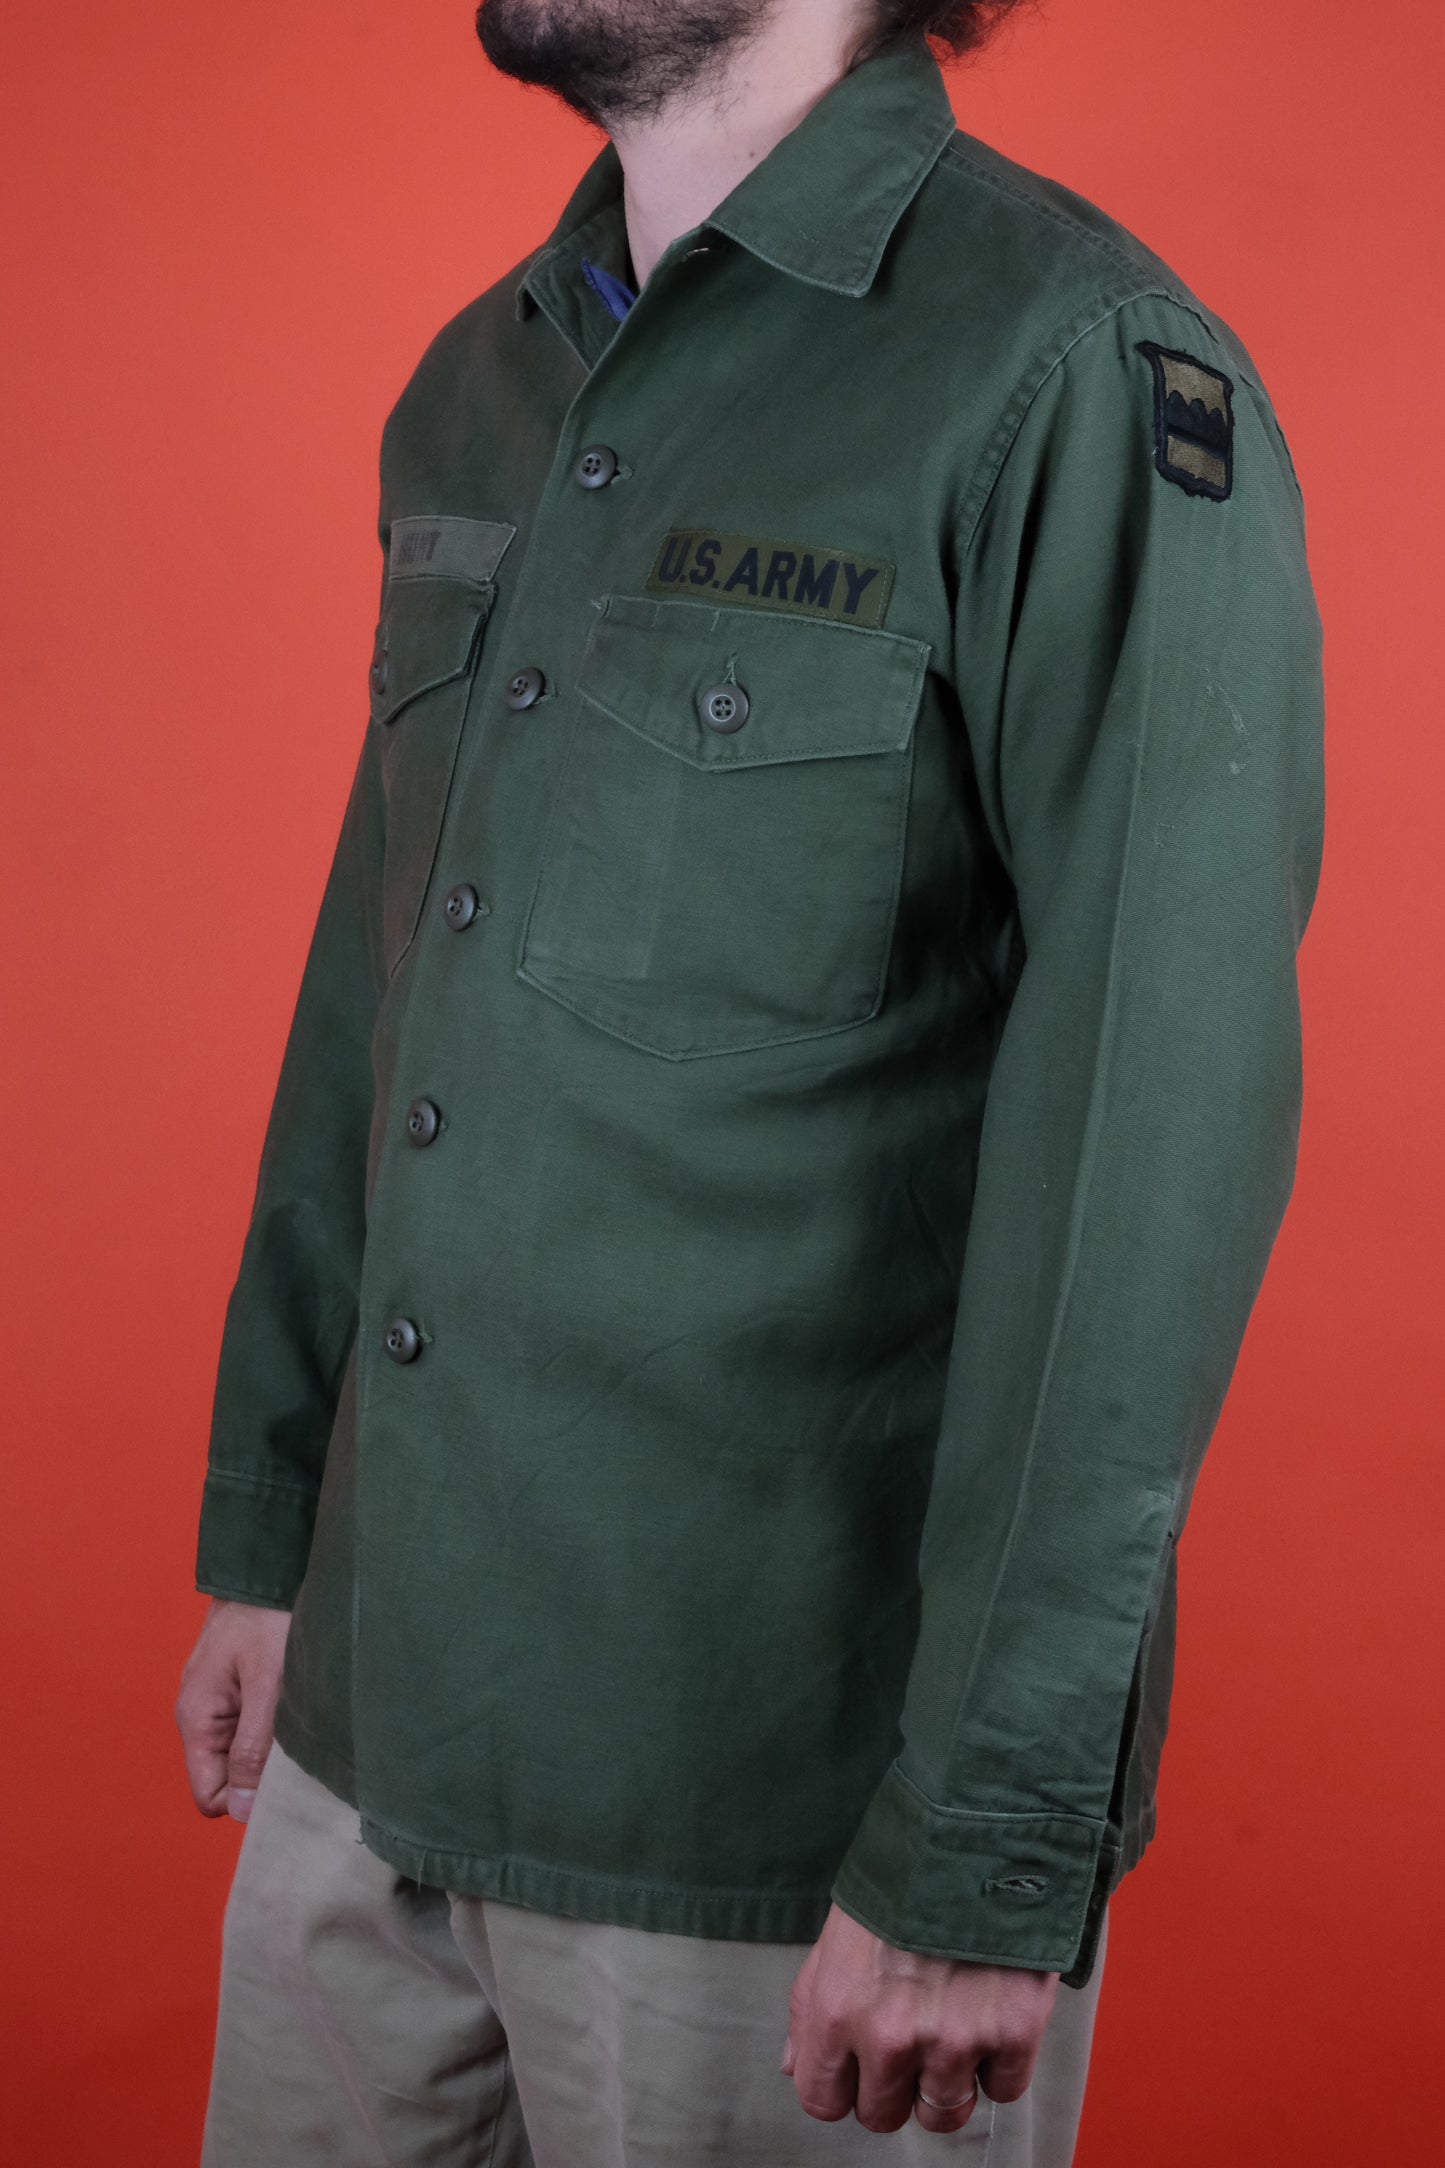 US Army OG-107 Shirt  - vintage clothing clochard92.com